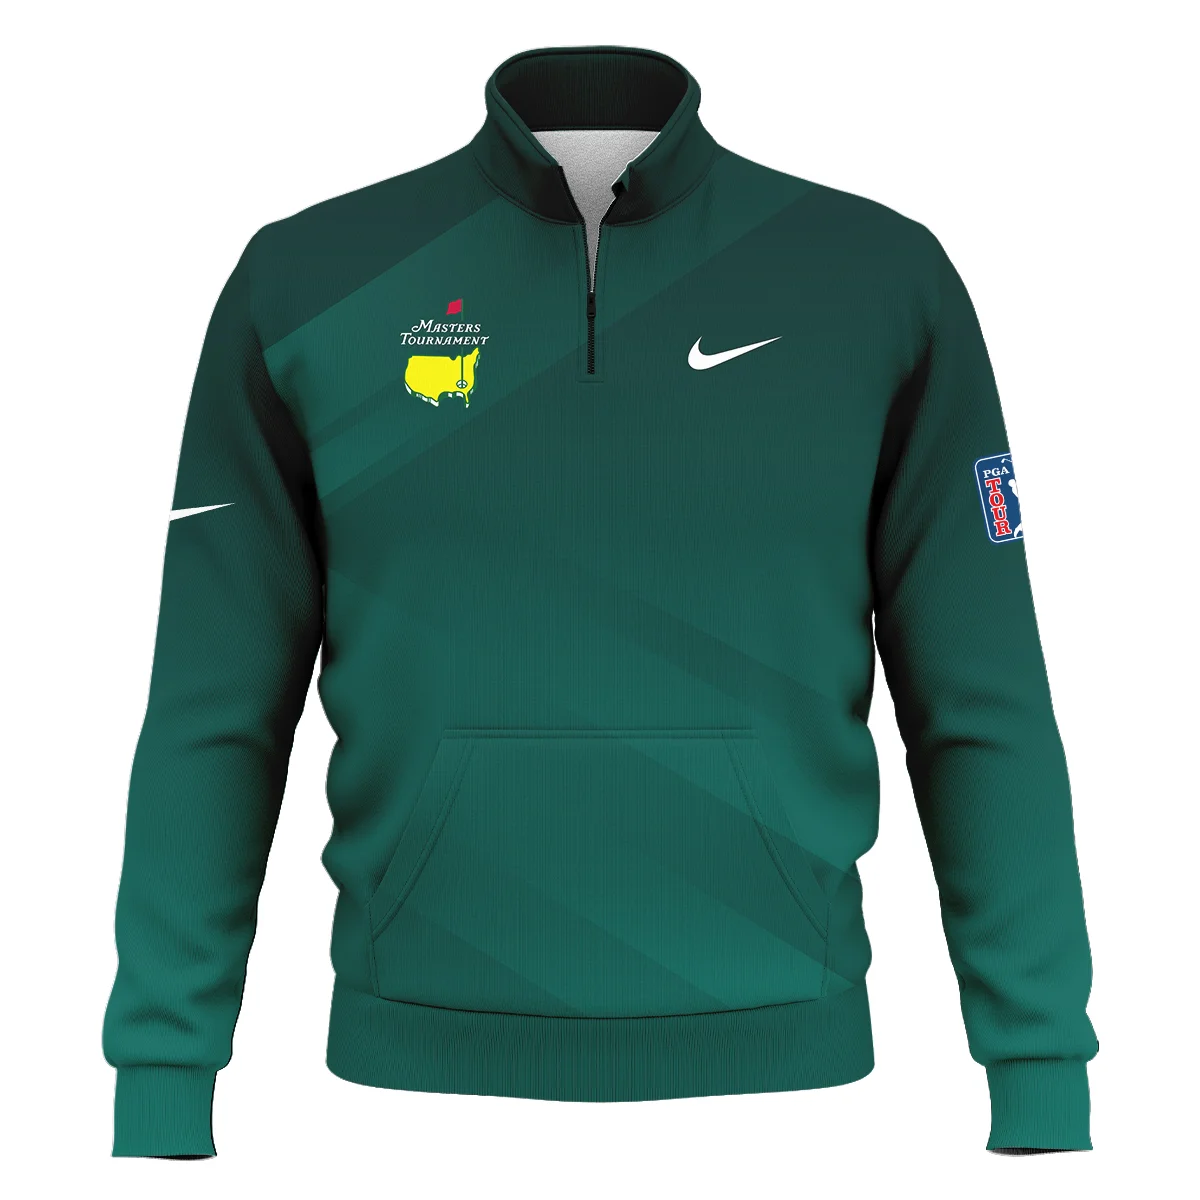 Masters Tournament Dark Green Gradient Golf Sport Nike Sleeveless Jacket Style Classic Sleeveless Jacket